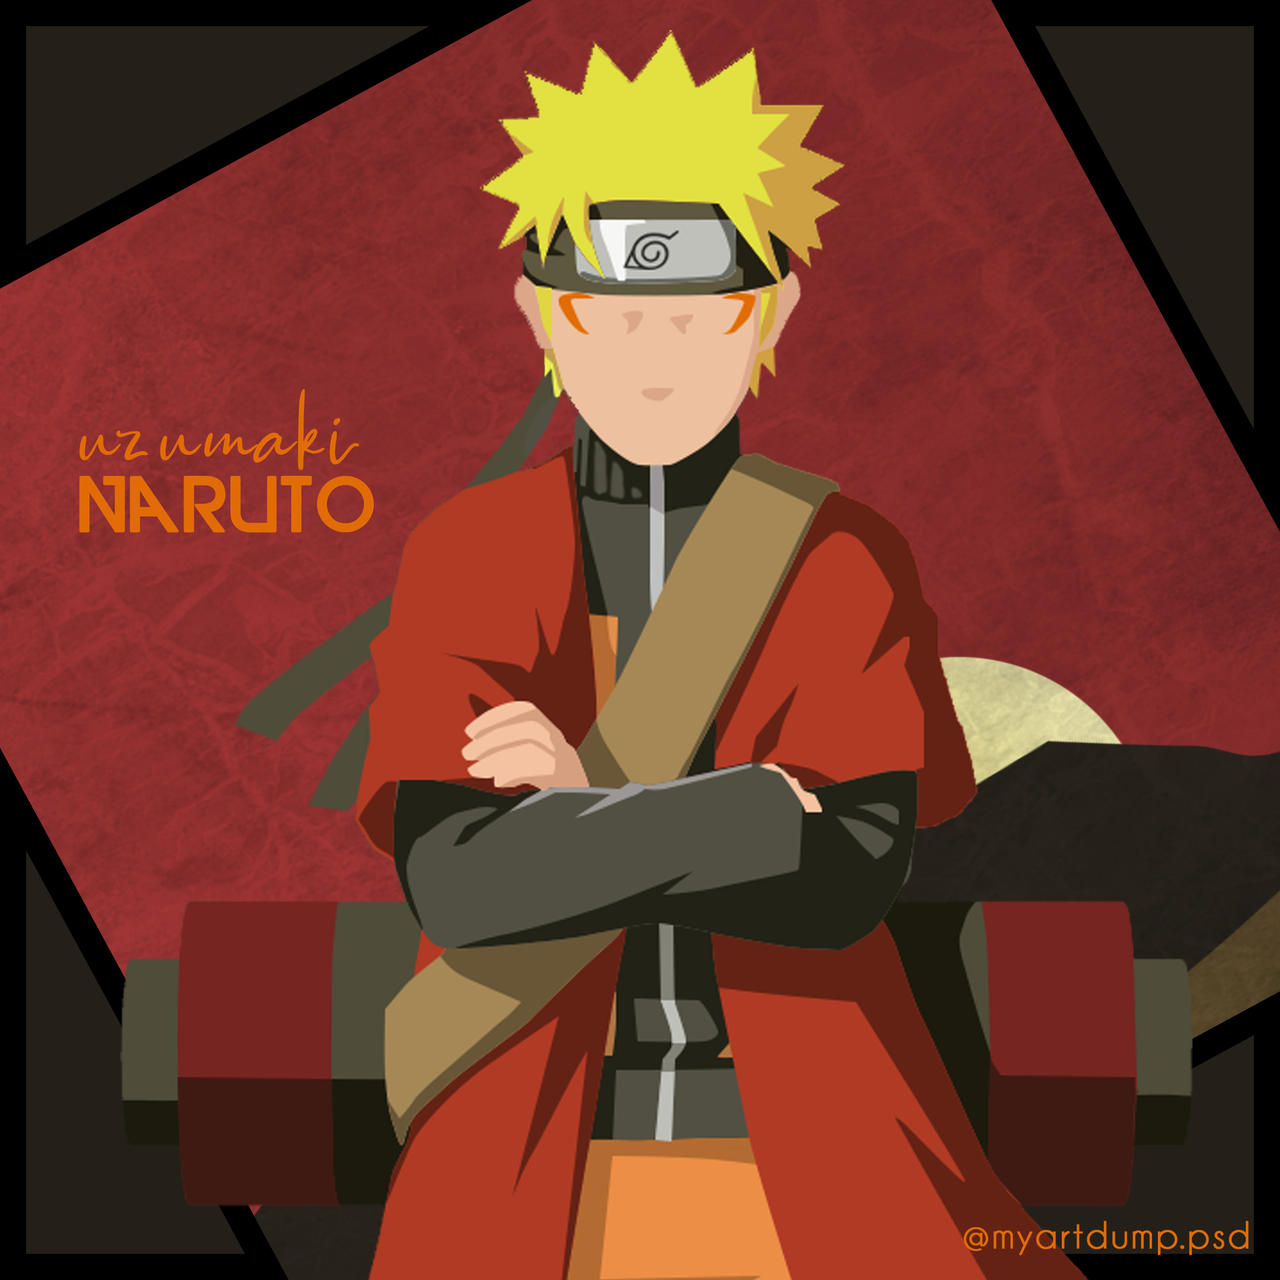 Naruto - Kakashi and Obito Wallpaper by Knotshoxtm on DeviantArt